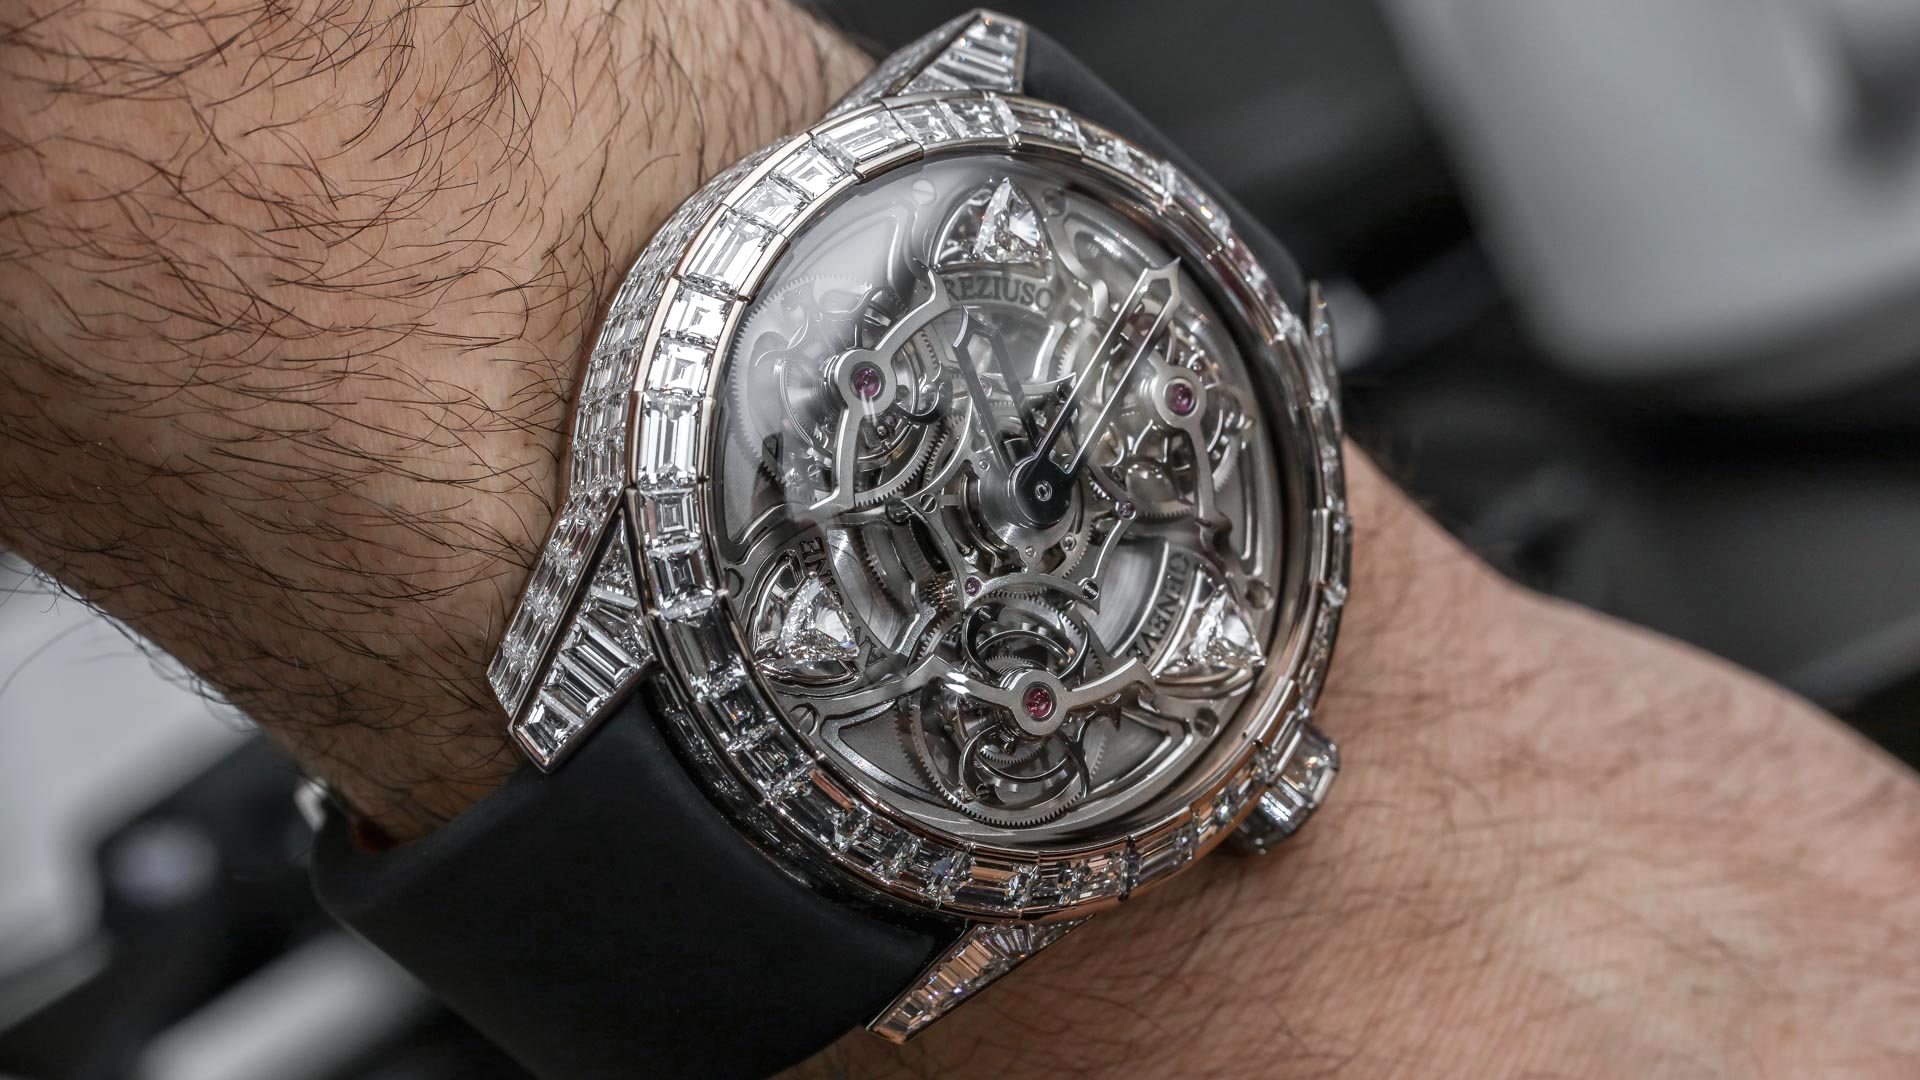 Hands-On With The $1,200,000 Antoine Preziuso Trillion Tourbillon Of Tourbillons 24-Carat Diamond Watch